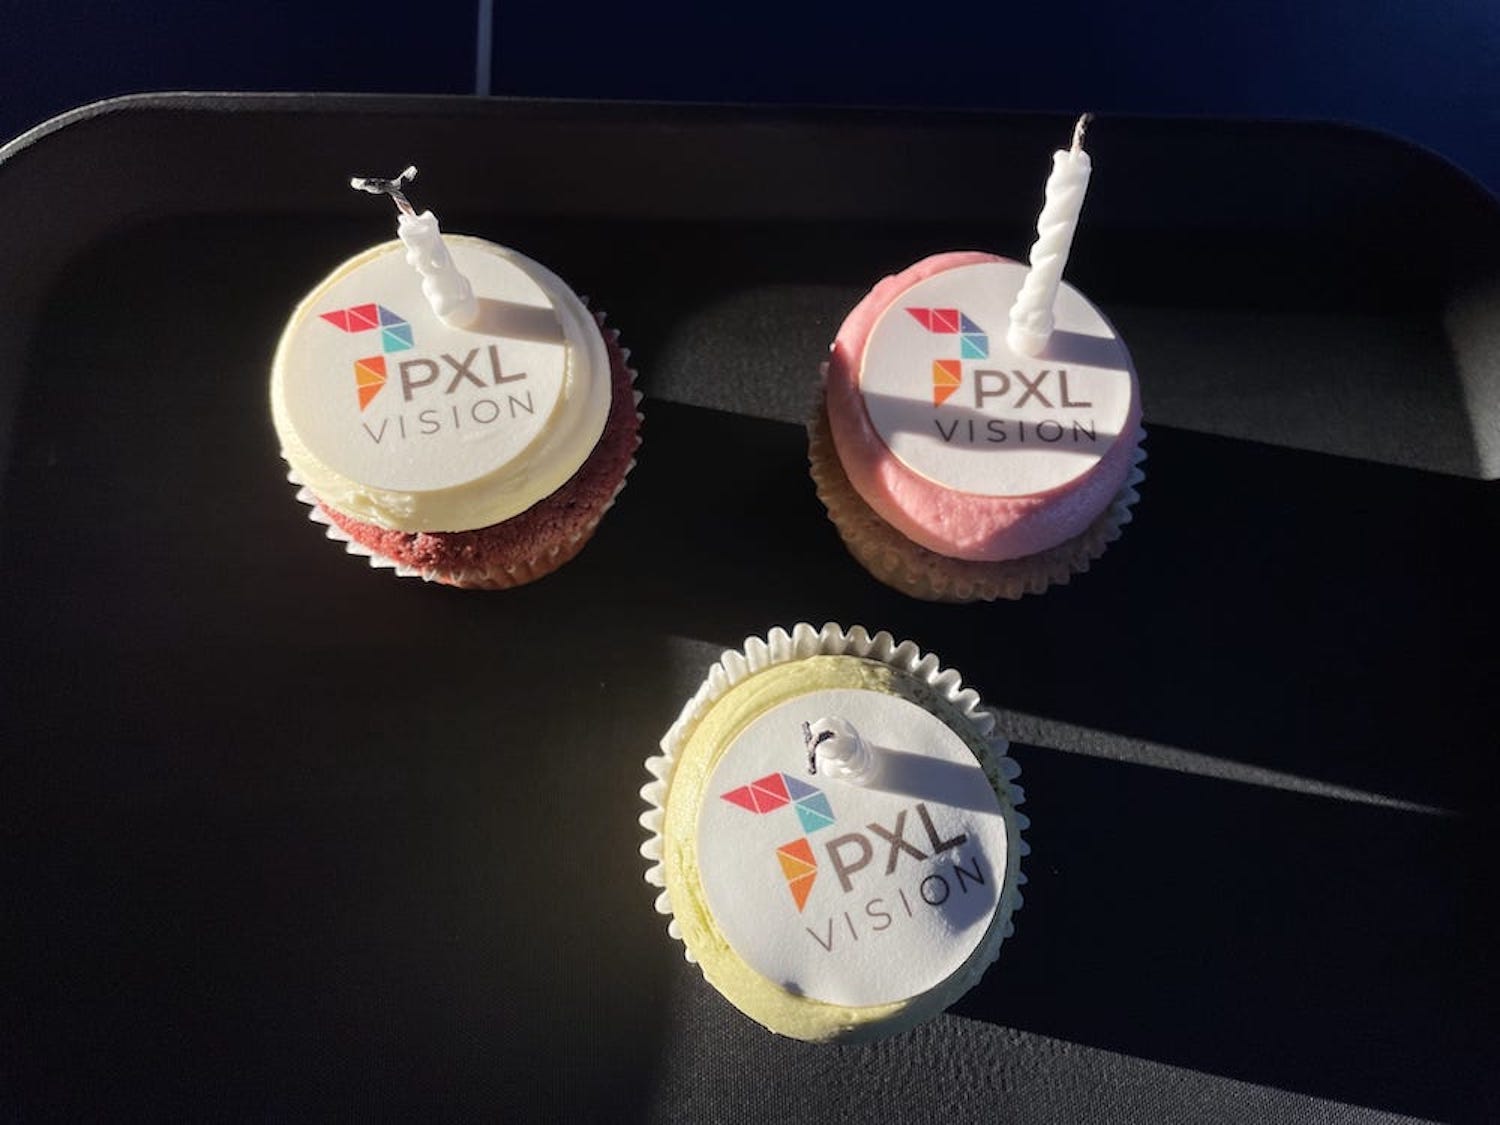 PXL Vision Cupcakes